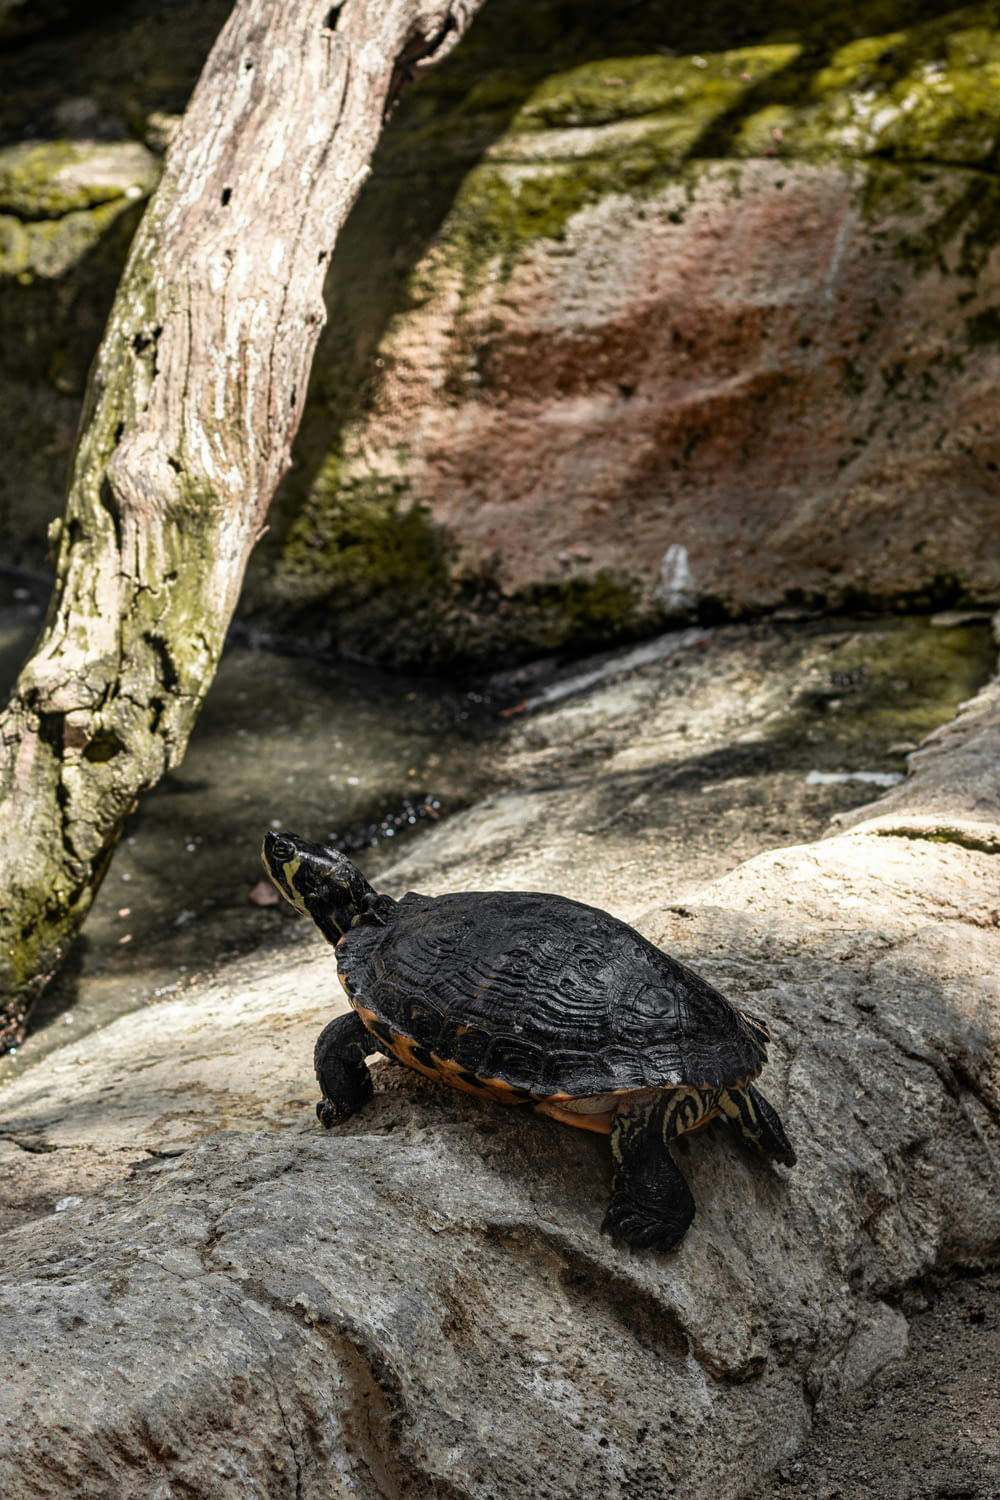 a turtle is sitting on a rock near a tree